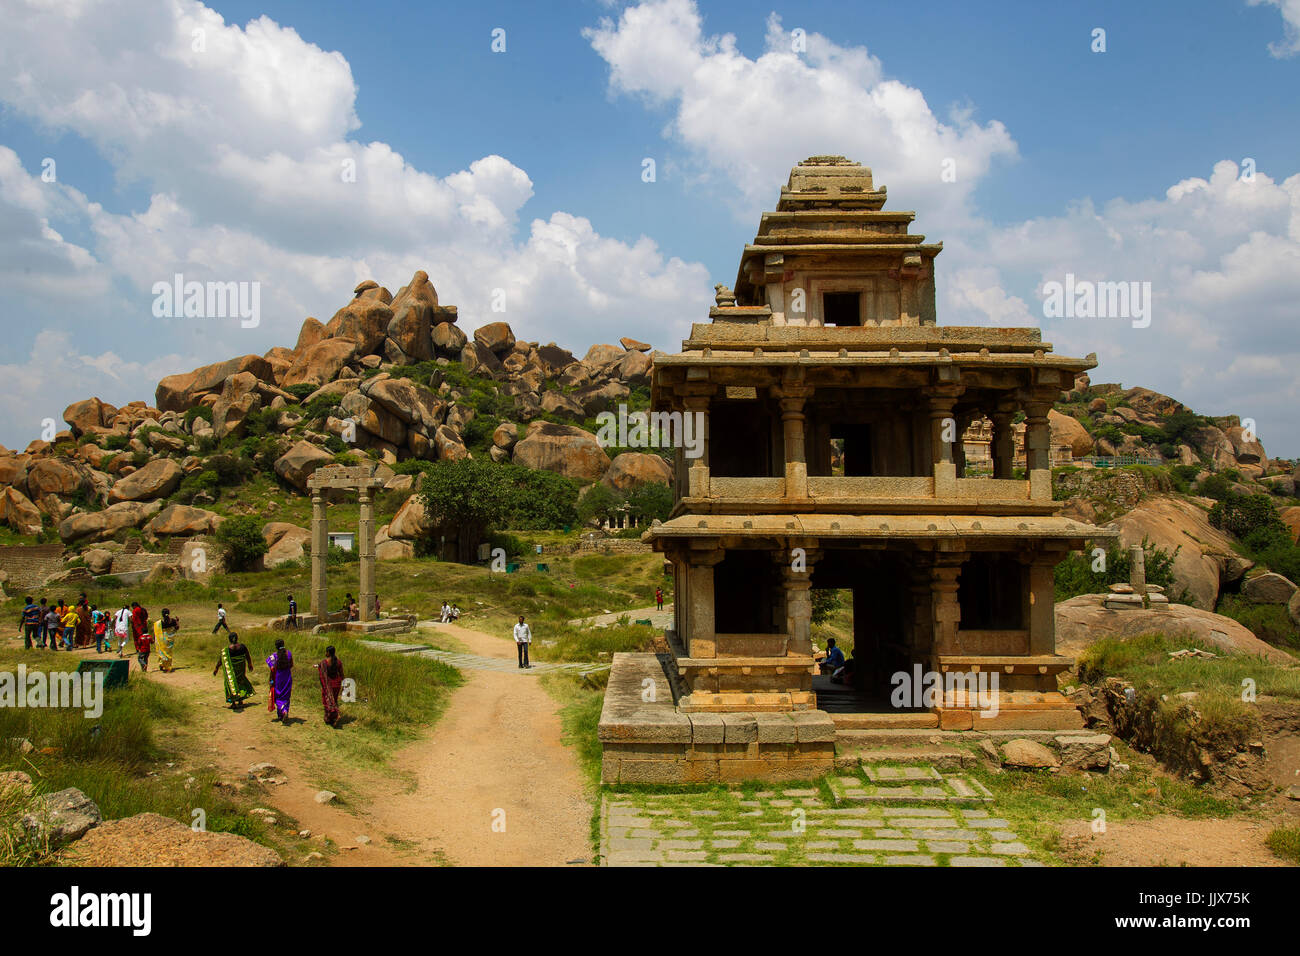 https://c8.alamy.com/comp/JJX75K/ruins-at-chiitradurga-fort-chitradurga-karnataka-india-JJX75K.jpg